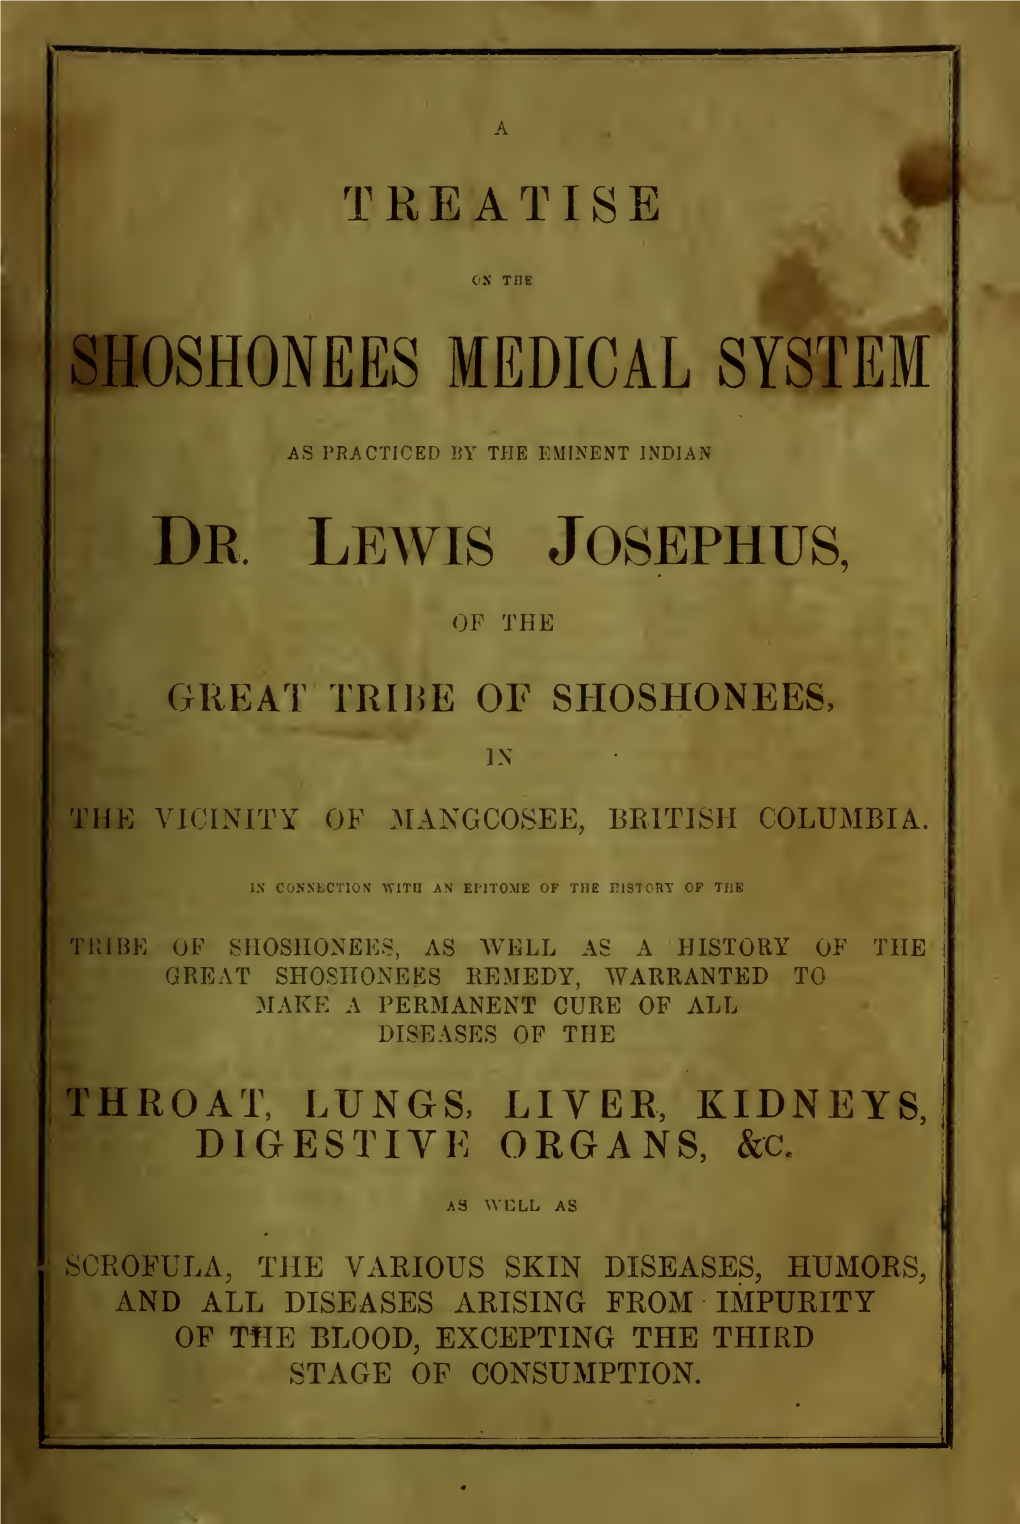 Shoshonees Medical System